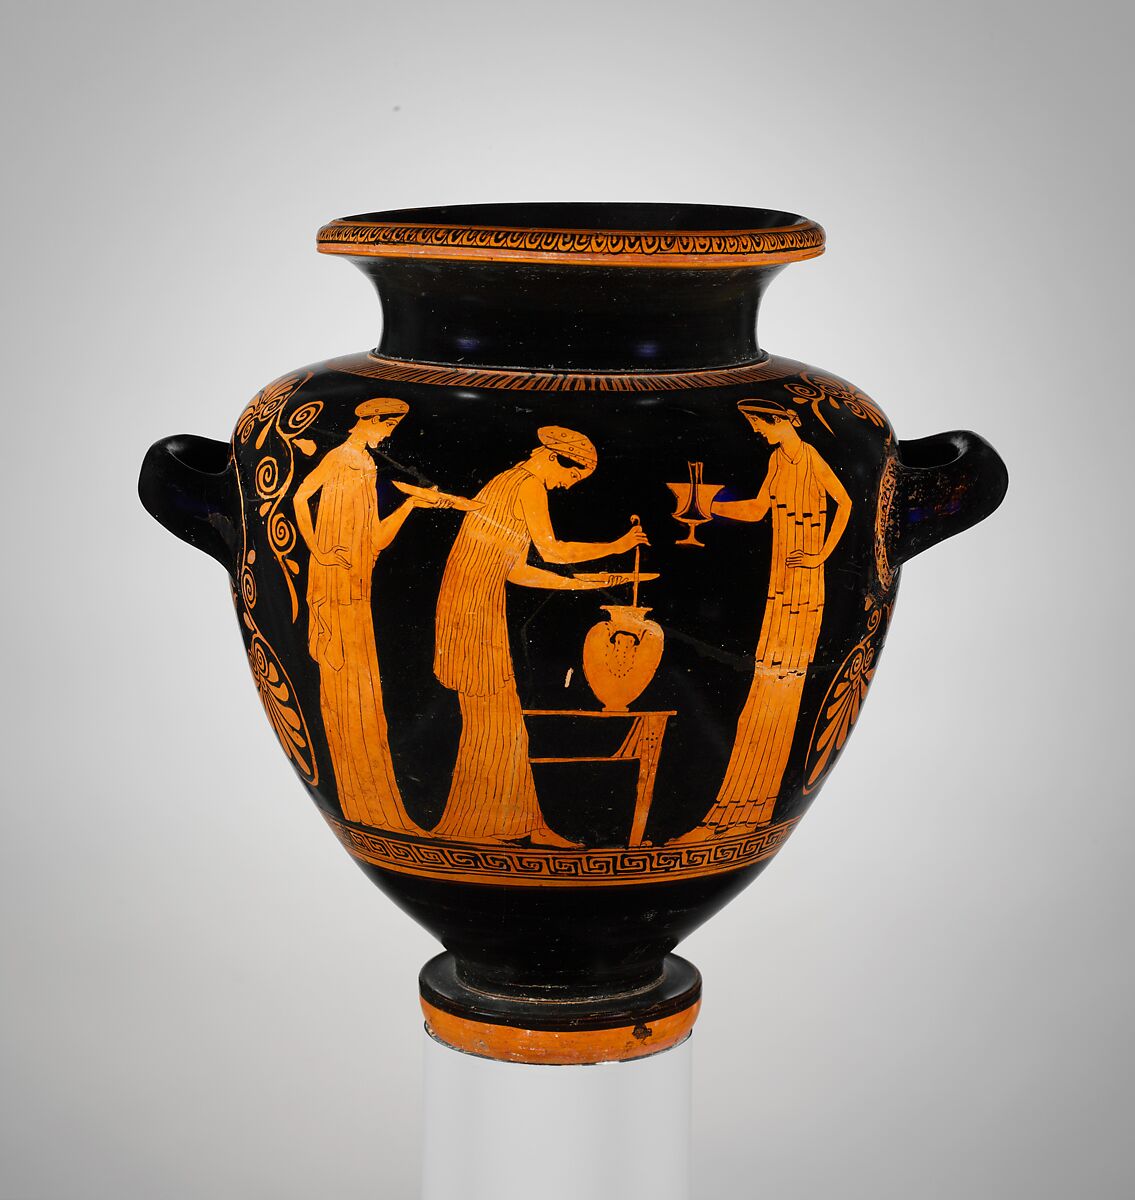 Terracotta stamnos (jar), Recalls the Barclay Painter, Terracotta, Greek, Attic 